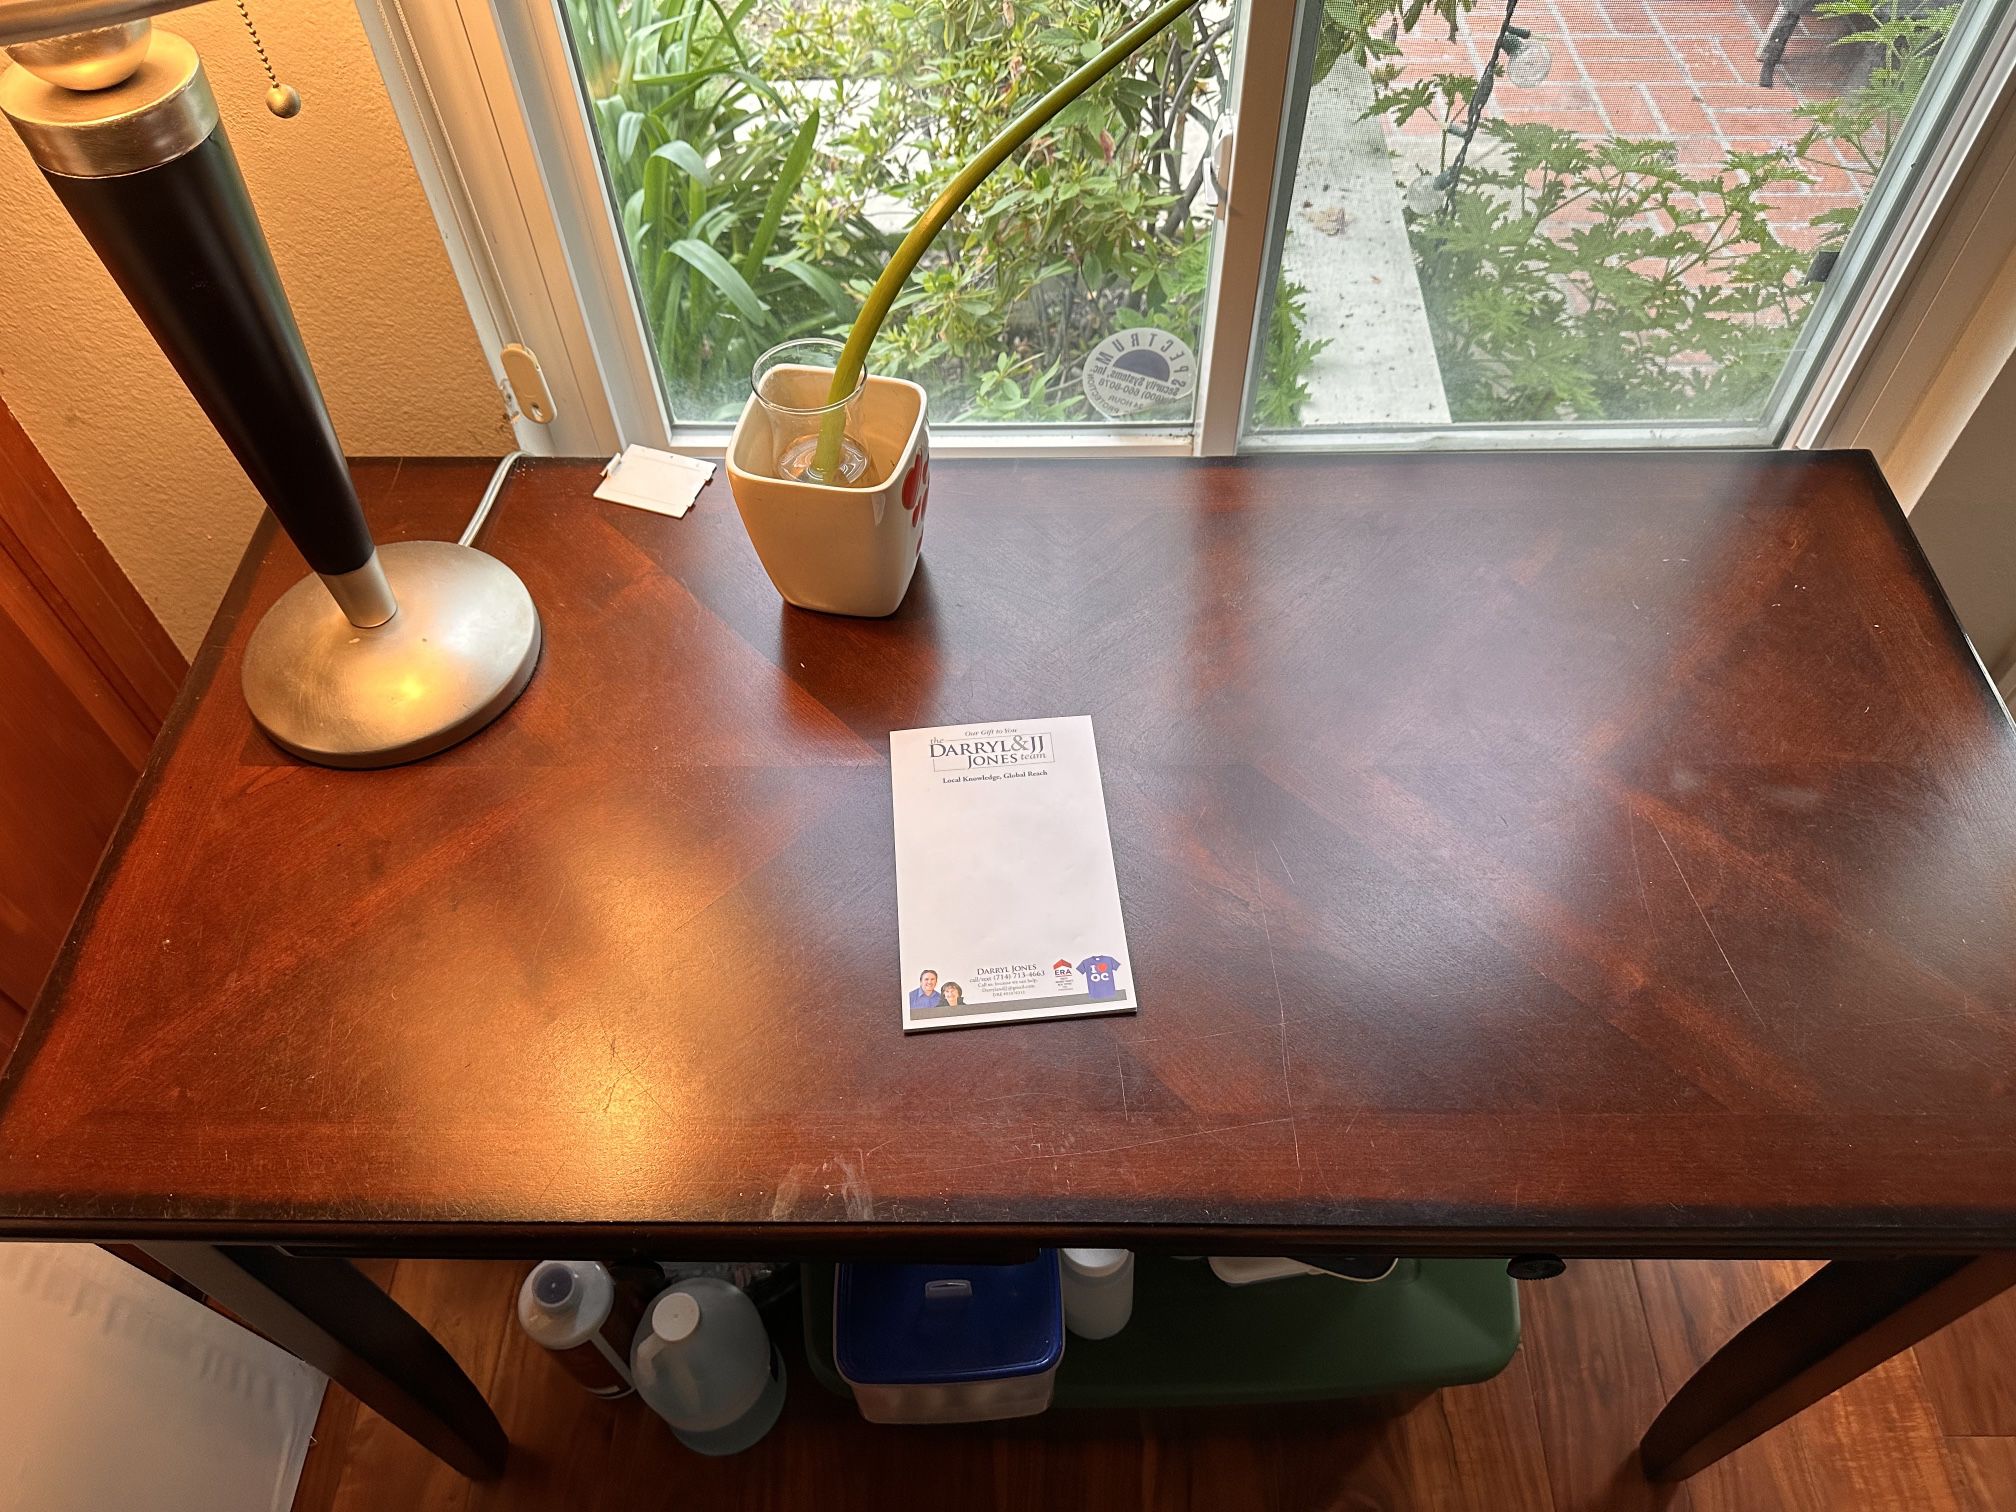 Desk For Sale 